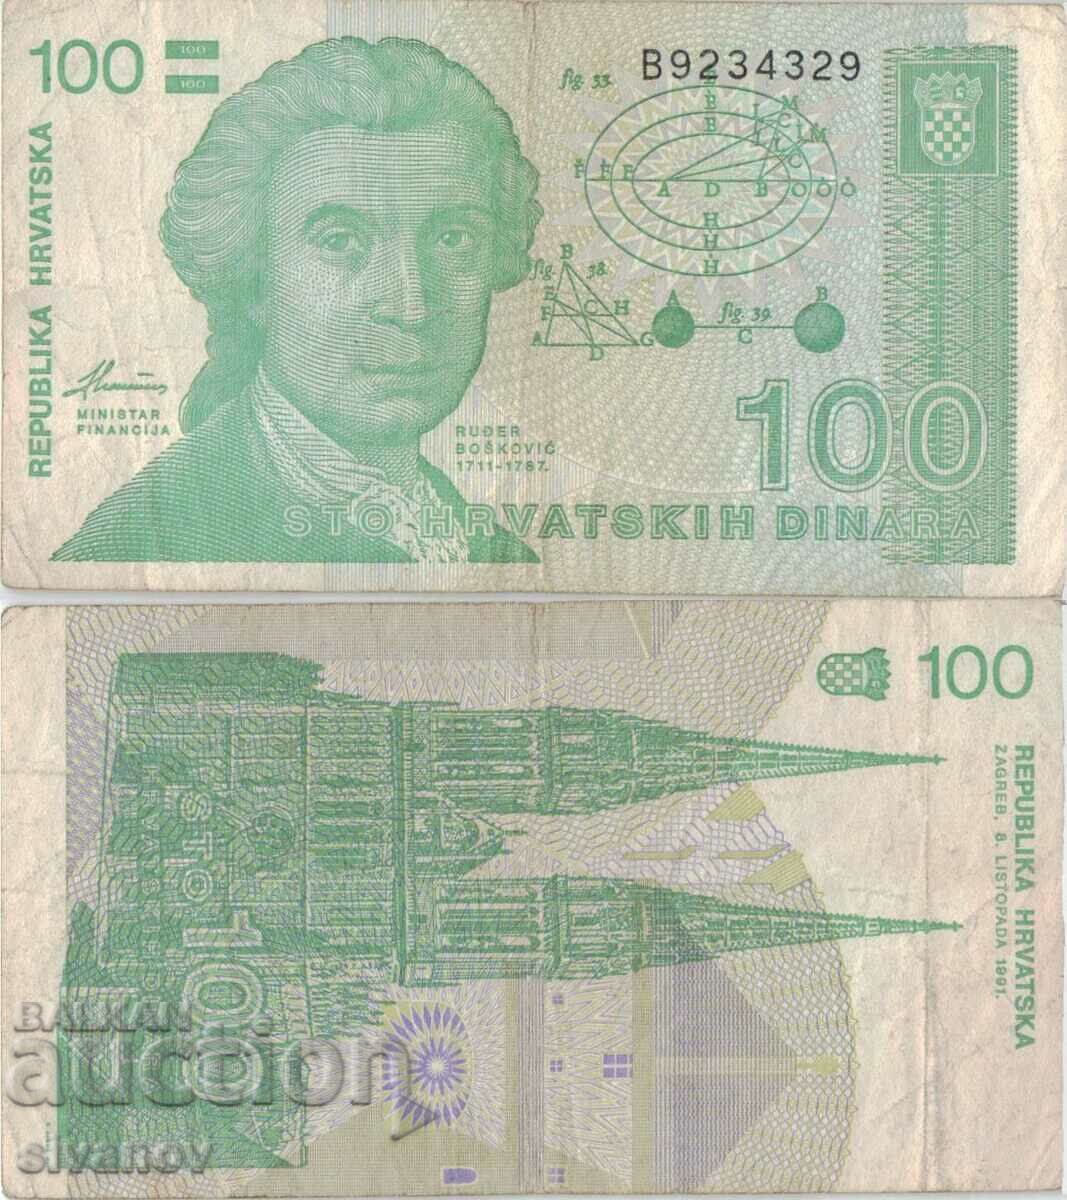 Croatia 100 dinars 1991 banknote #5327